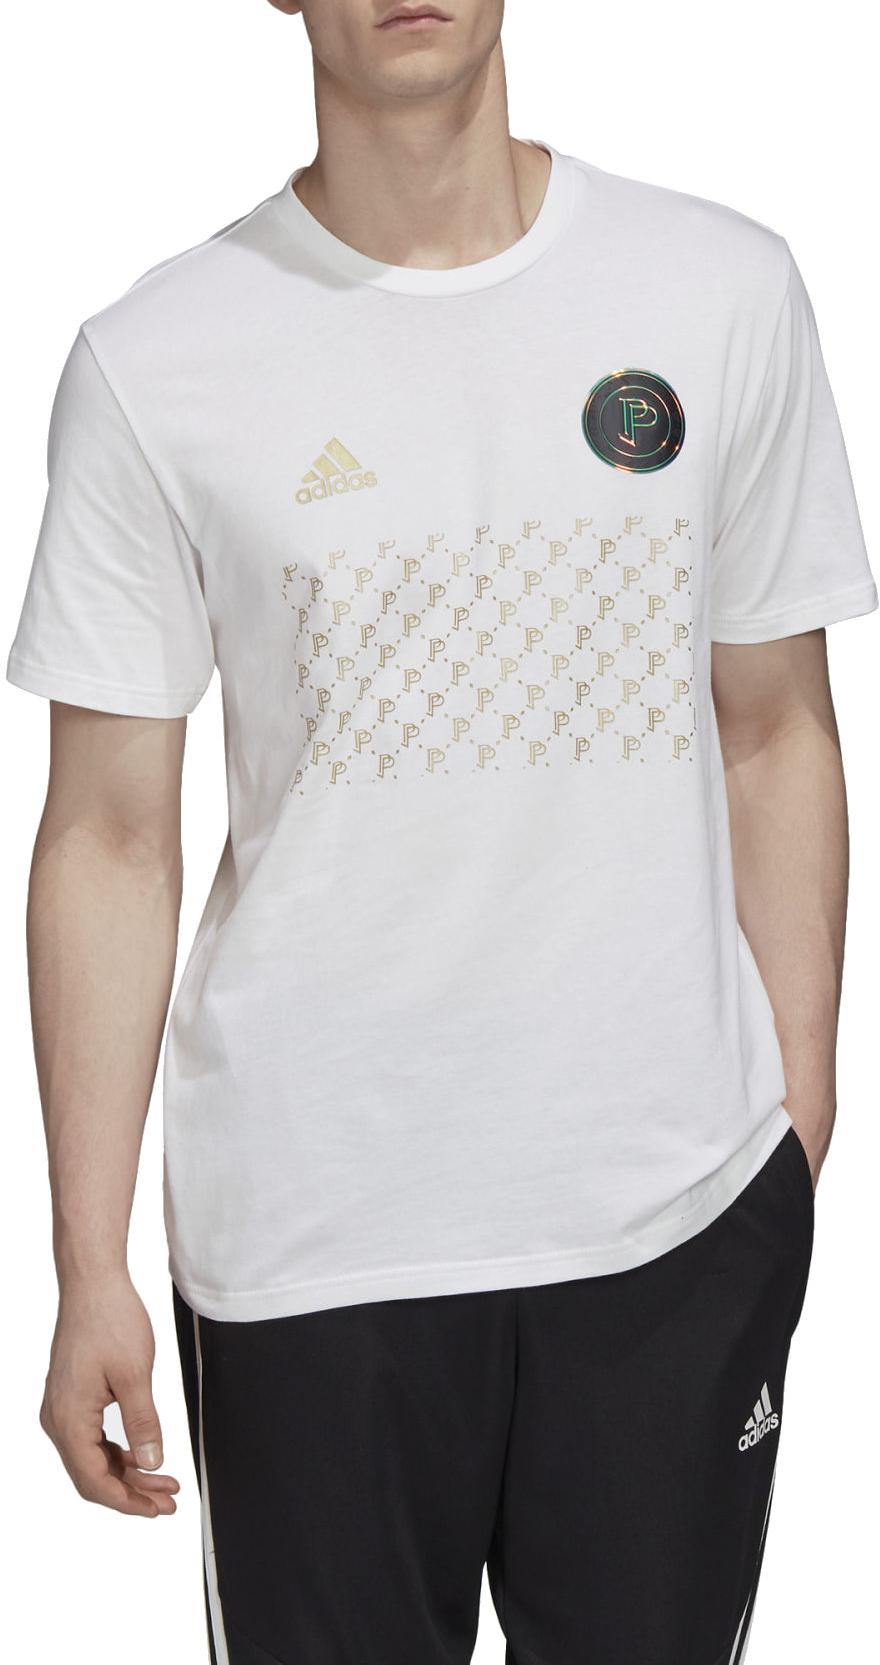 Pánské tričko s krátkým rukávem adidas Paul Pogba Graphic